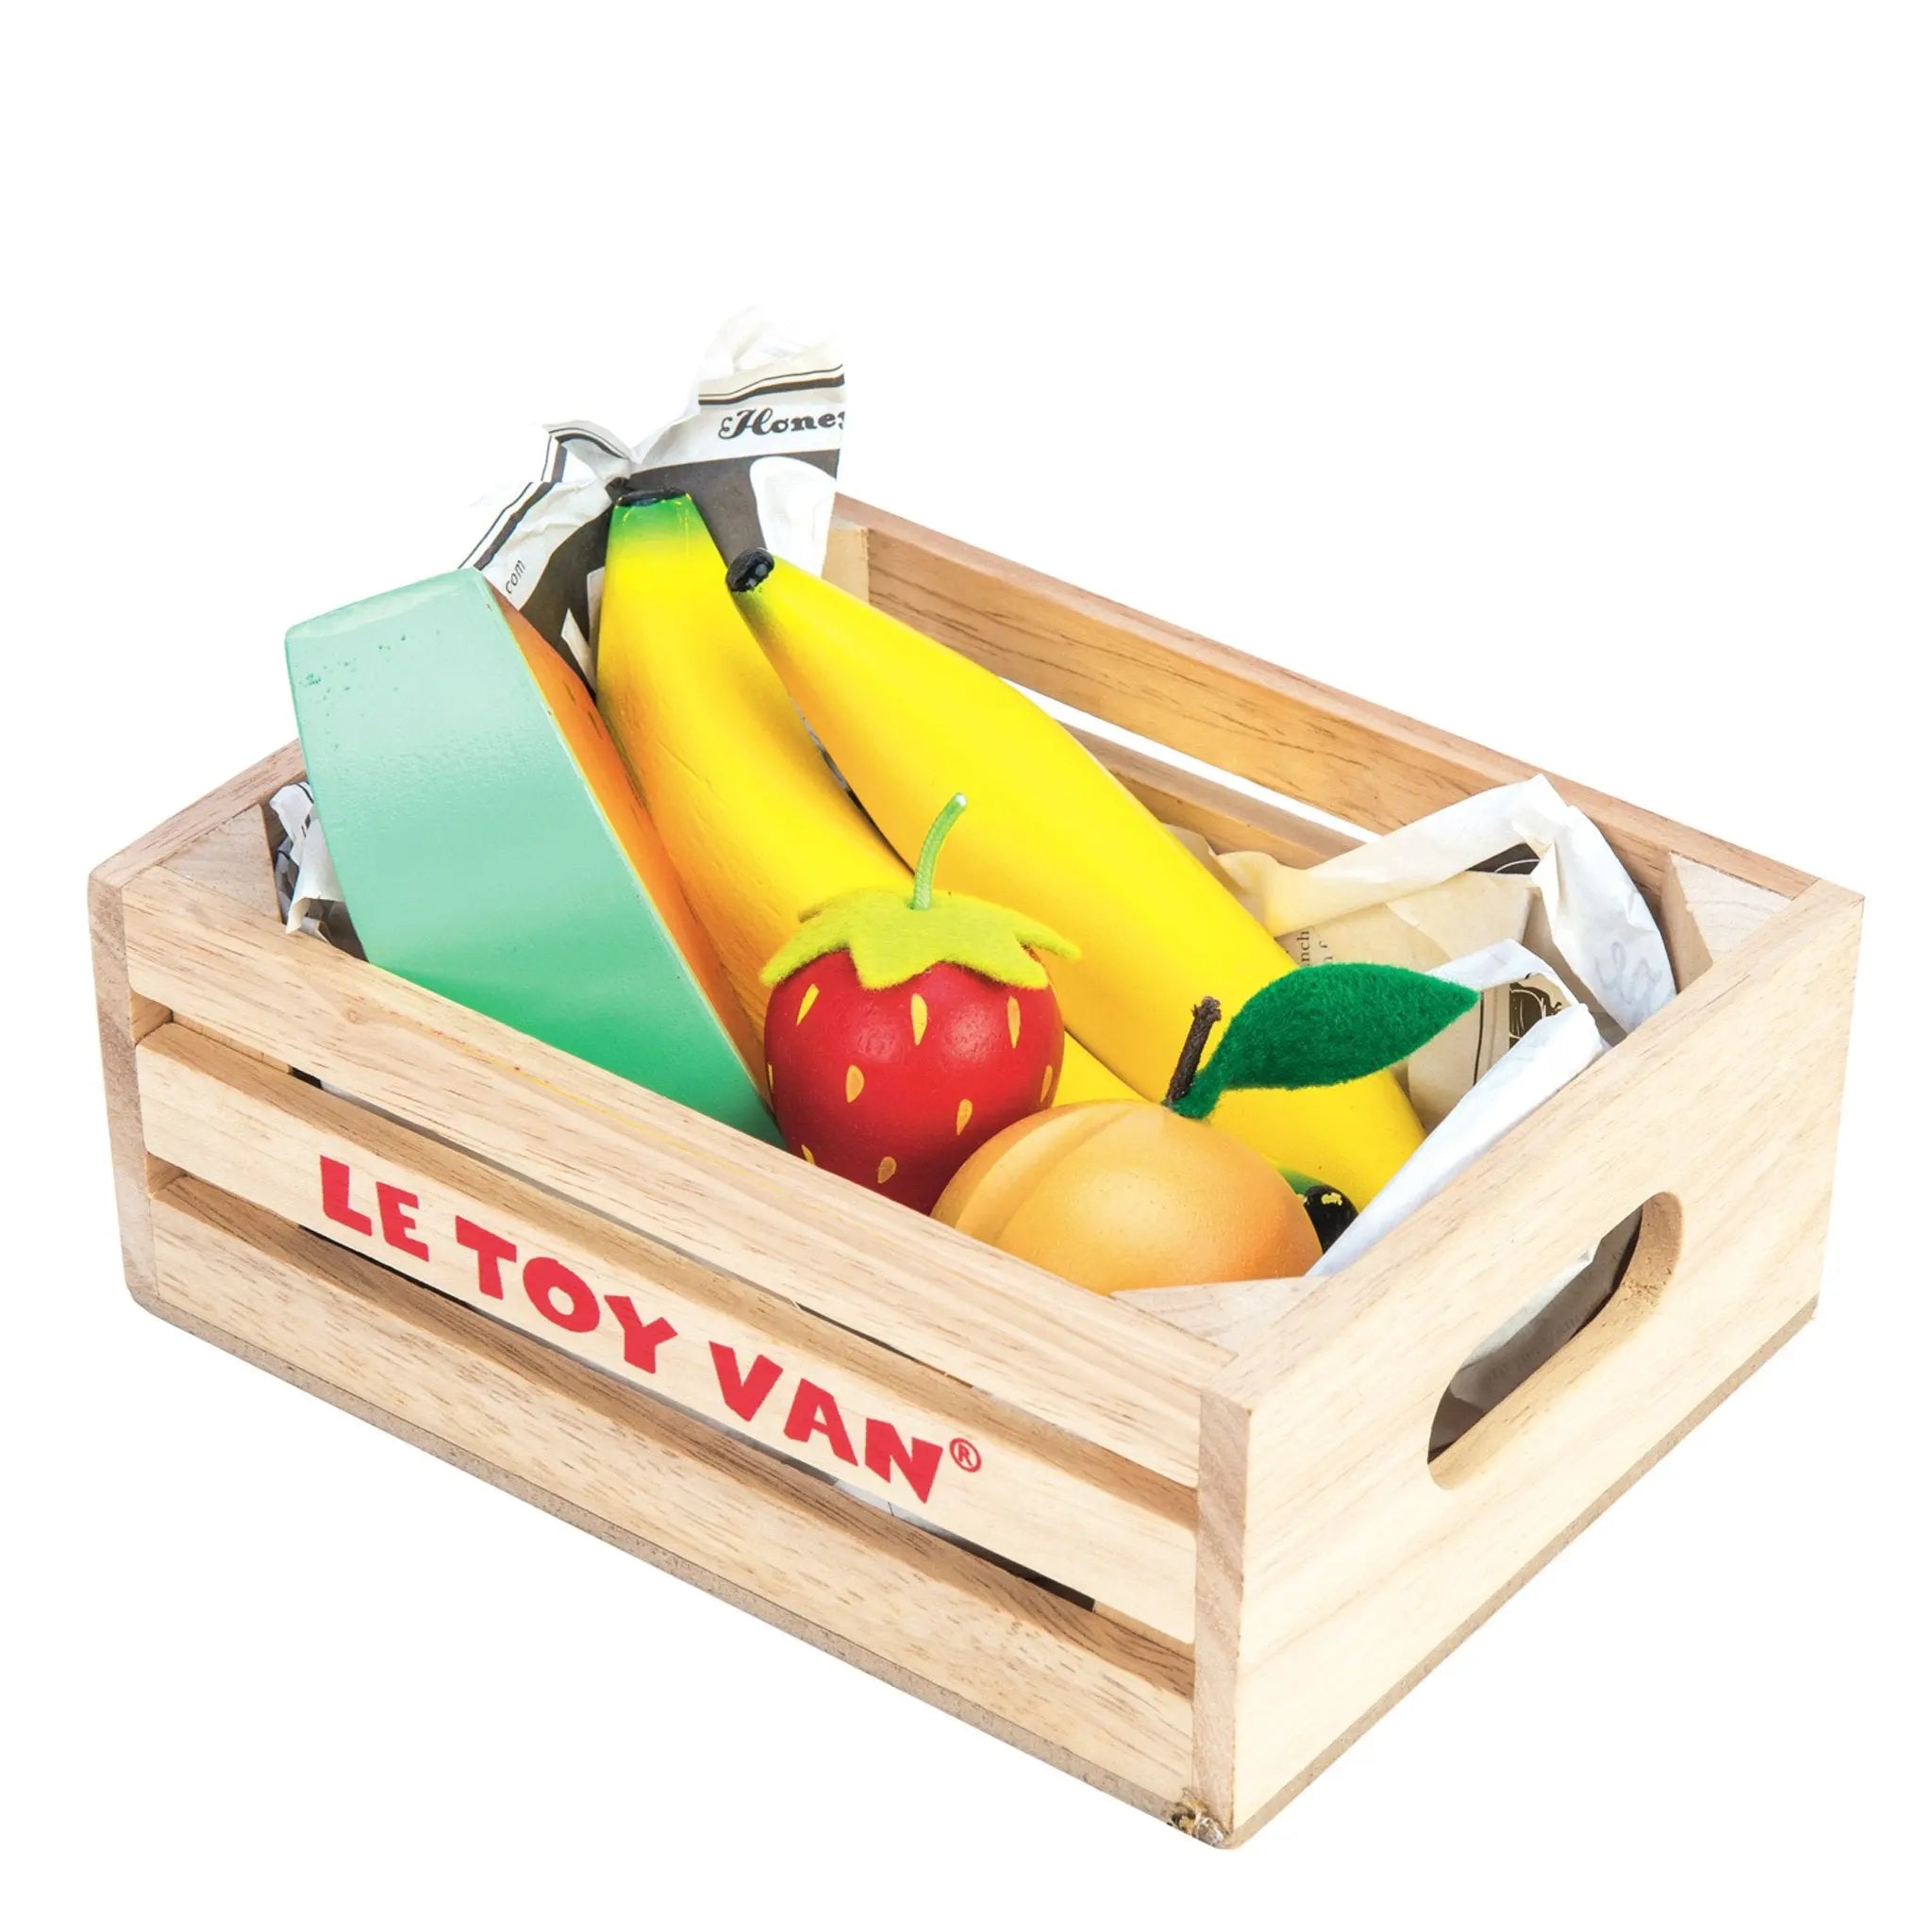 Fruits '5 a Day' Crate-Wooden toys & more-Le Toy Van-Blue Almonds-London-South Kensington